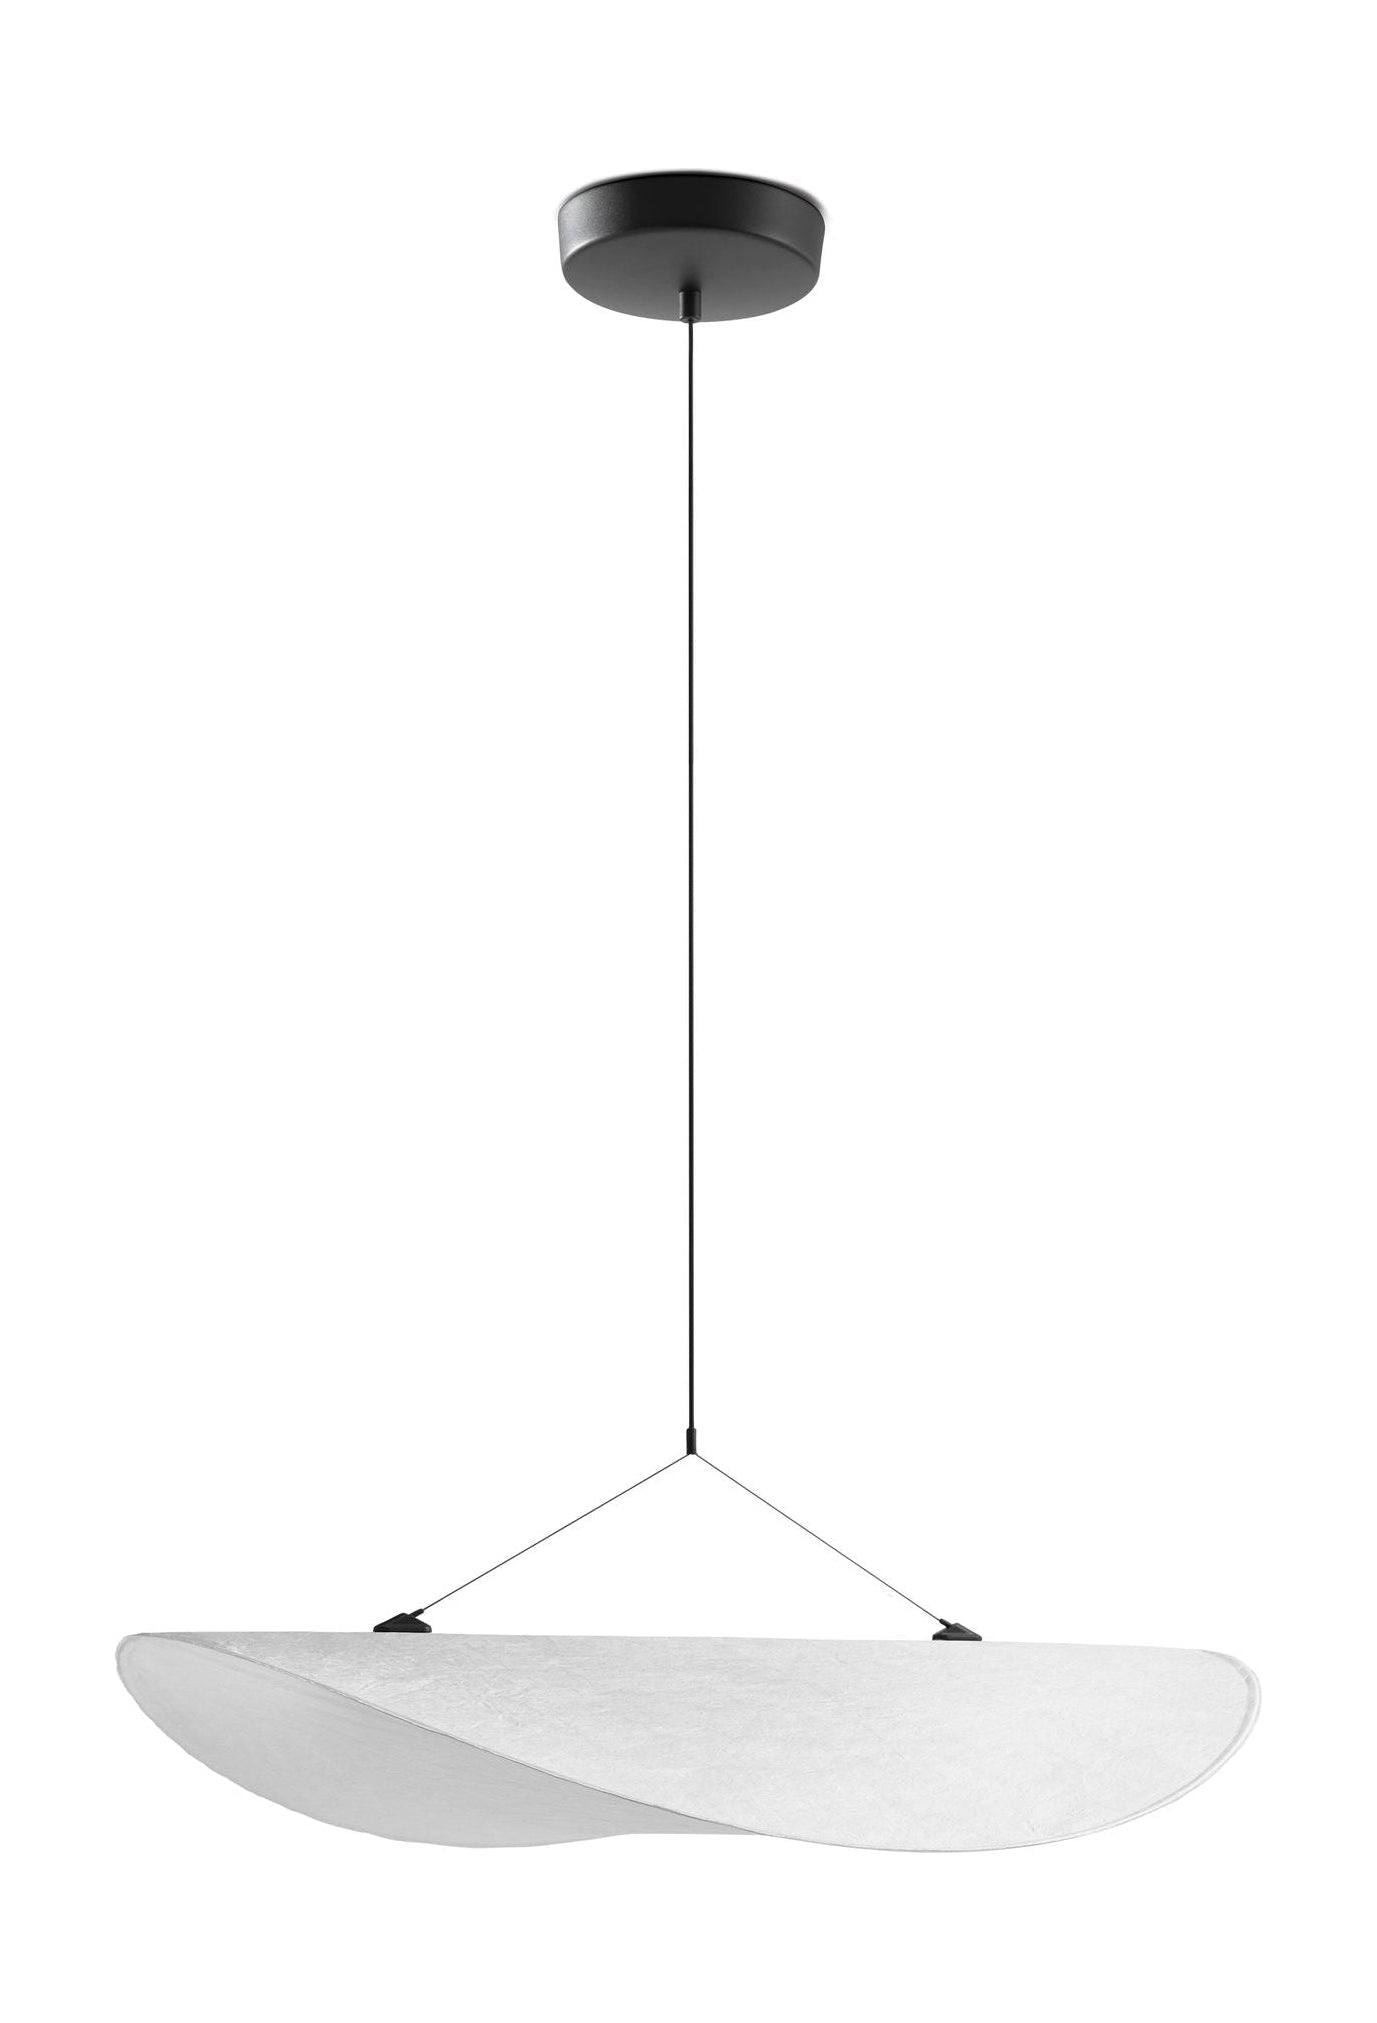 New Works Kireä riipuslamppu, Ø 70 cm